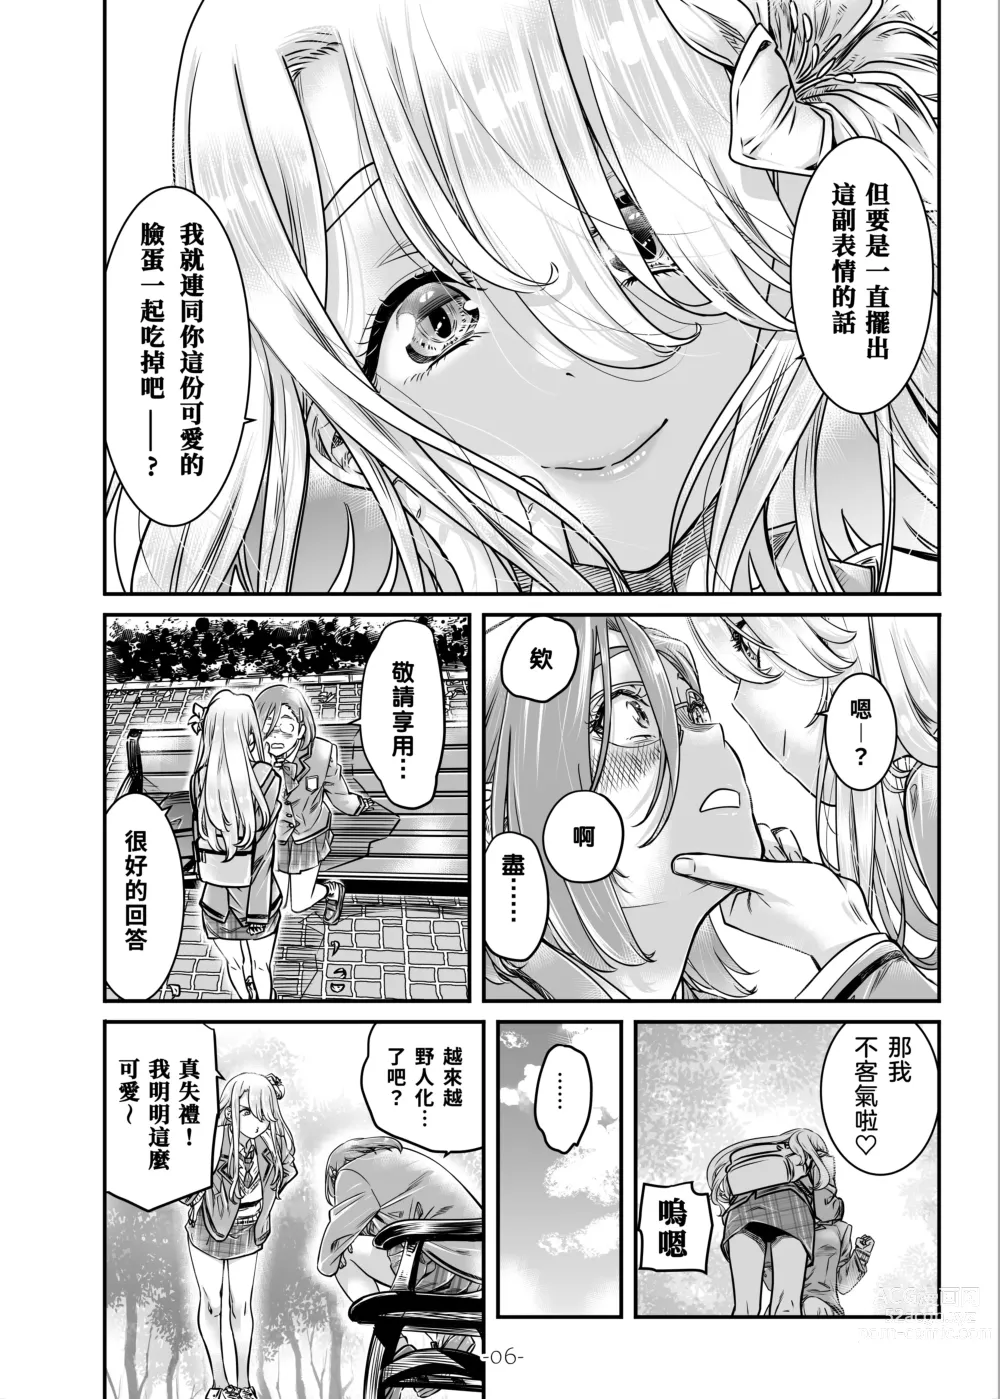 Page 7 of doujinshi Nadeshiko Hiyori 2nd season - SERIES of GIRLs LOE STORY ~episode 3~